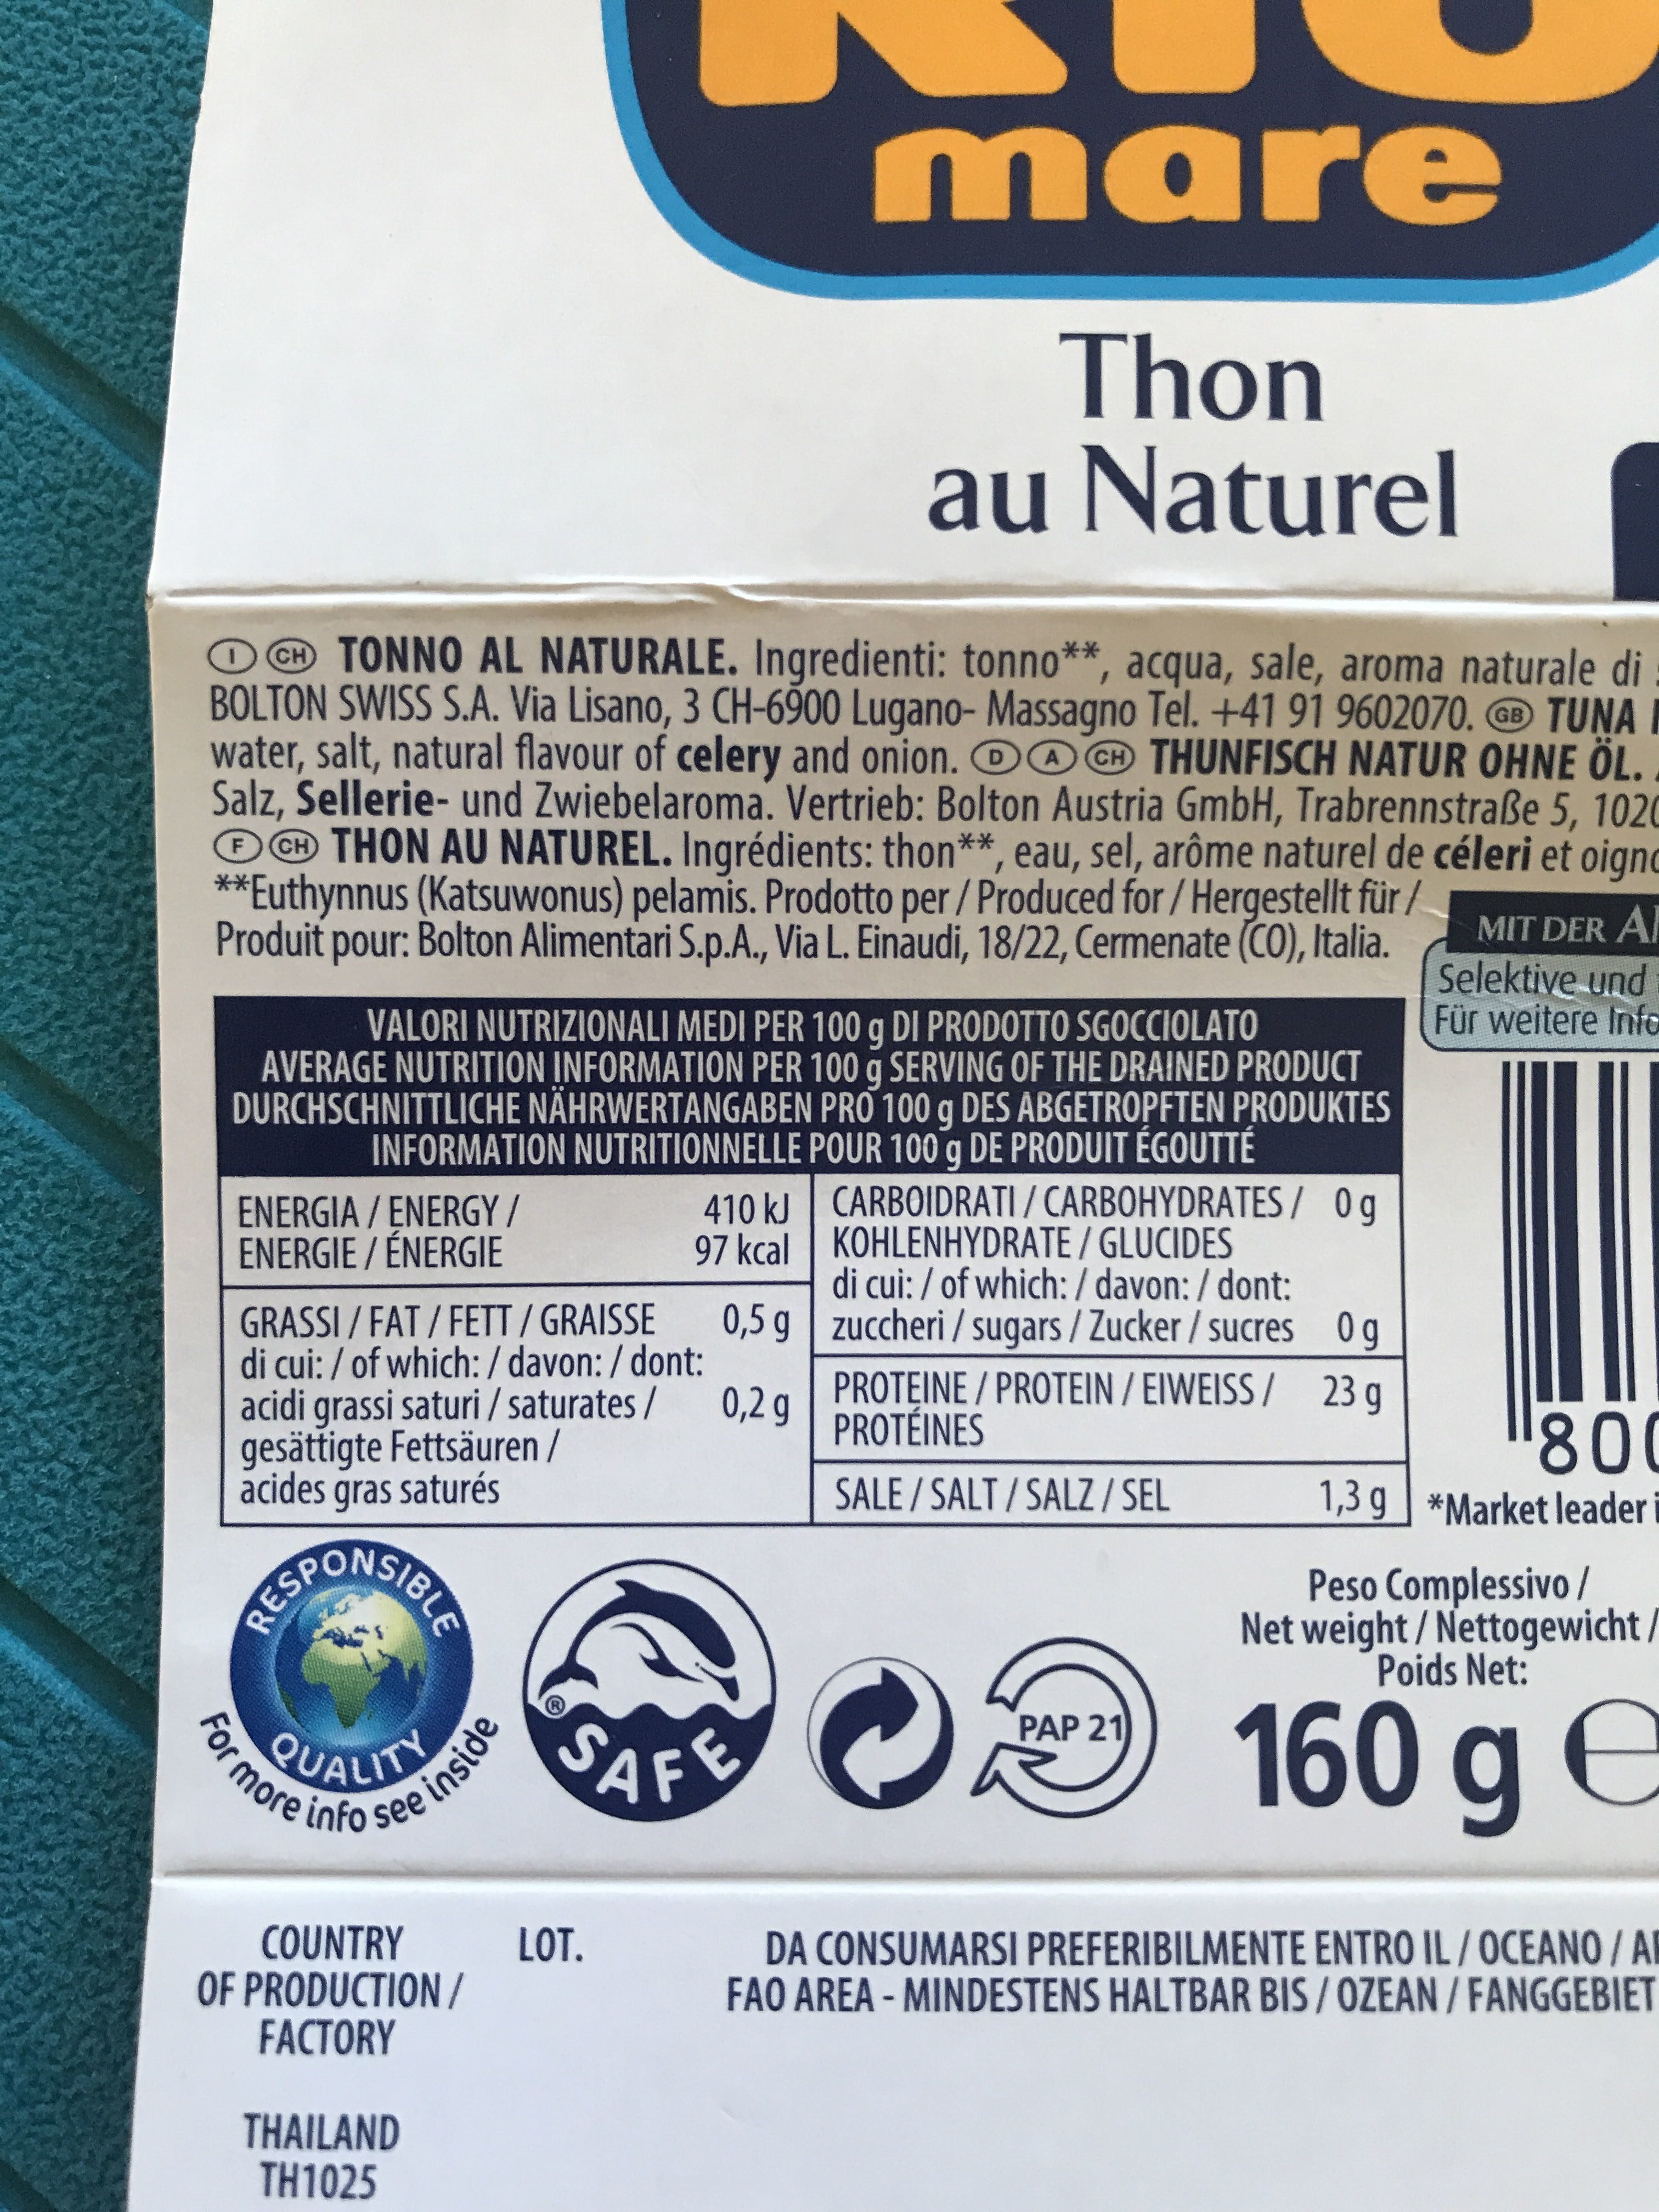 Thunfisch natur ohne Öl - Product